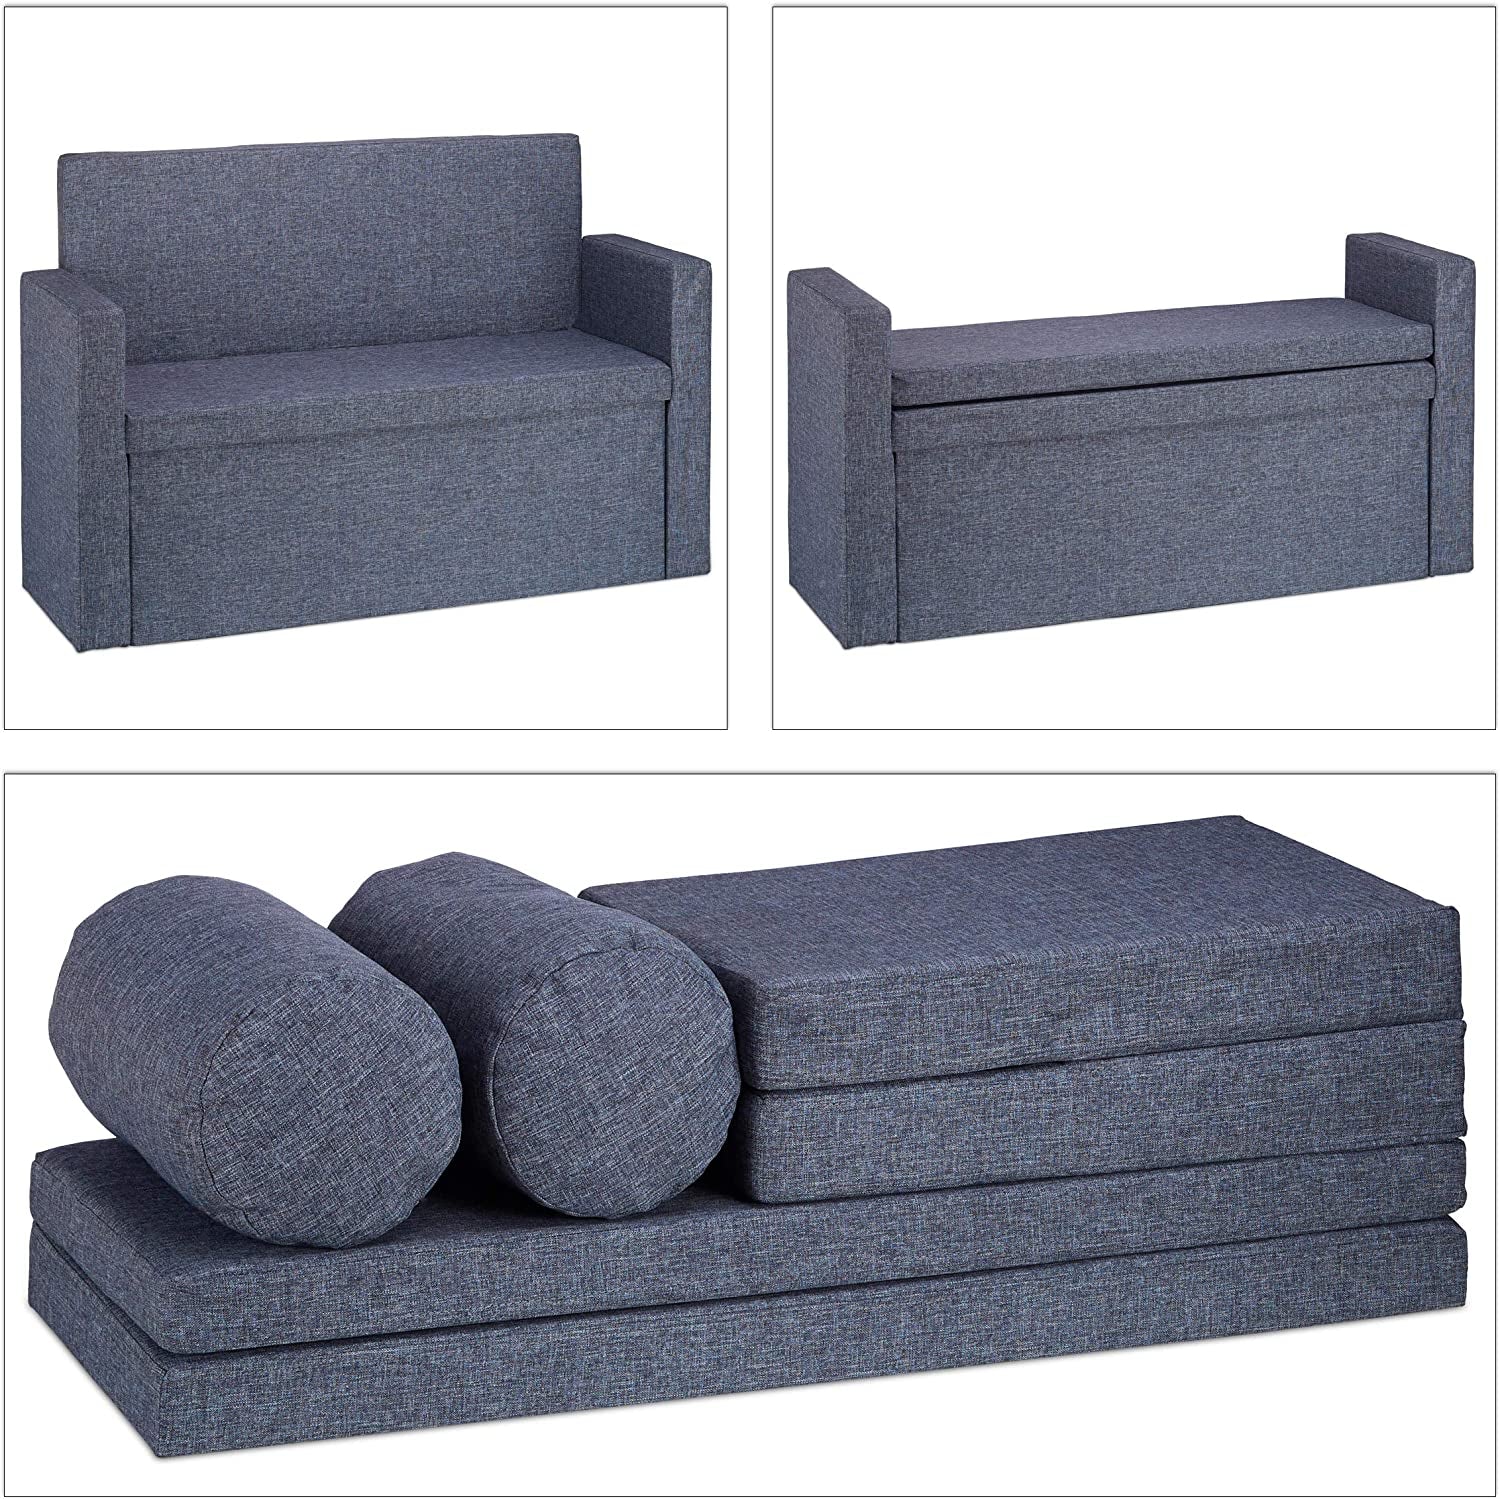 Bench Seat with Backrest, Pillows, Foldable, Storage Ottoman, Padded, Hallway Chest, 75X115X47Cm, Grey